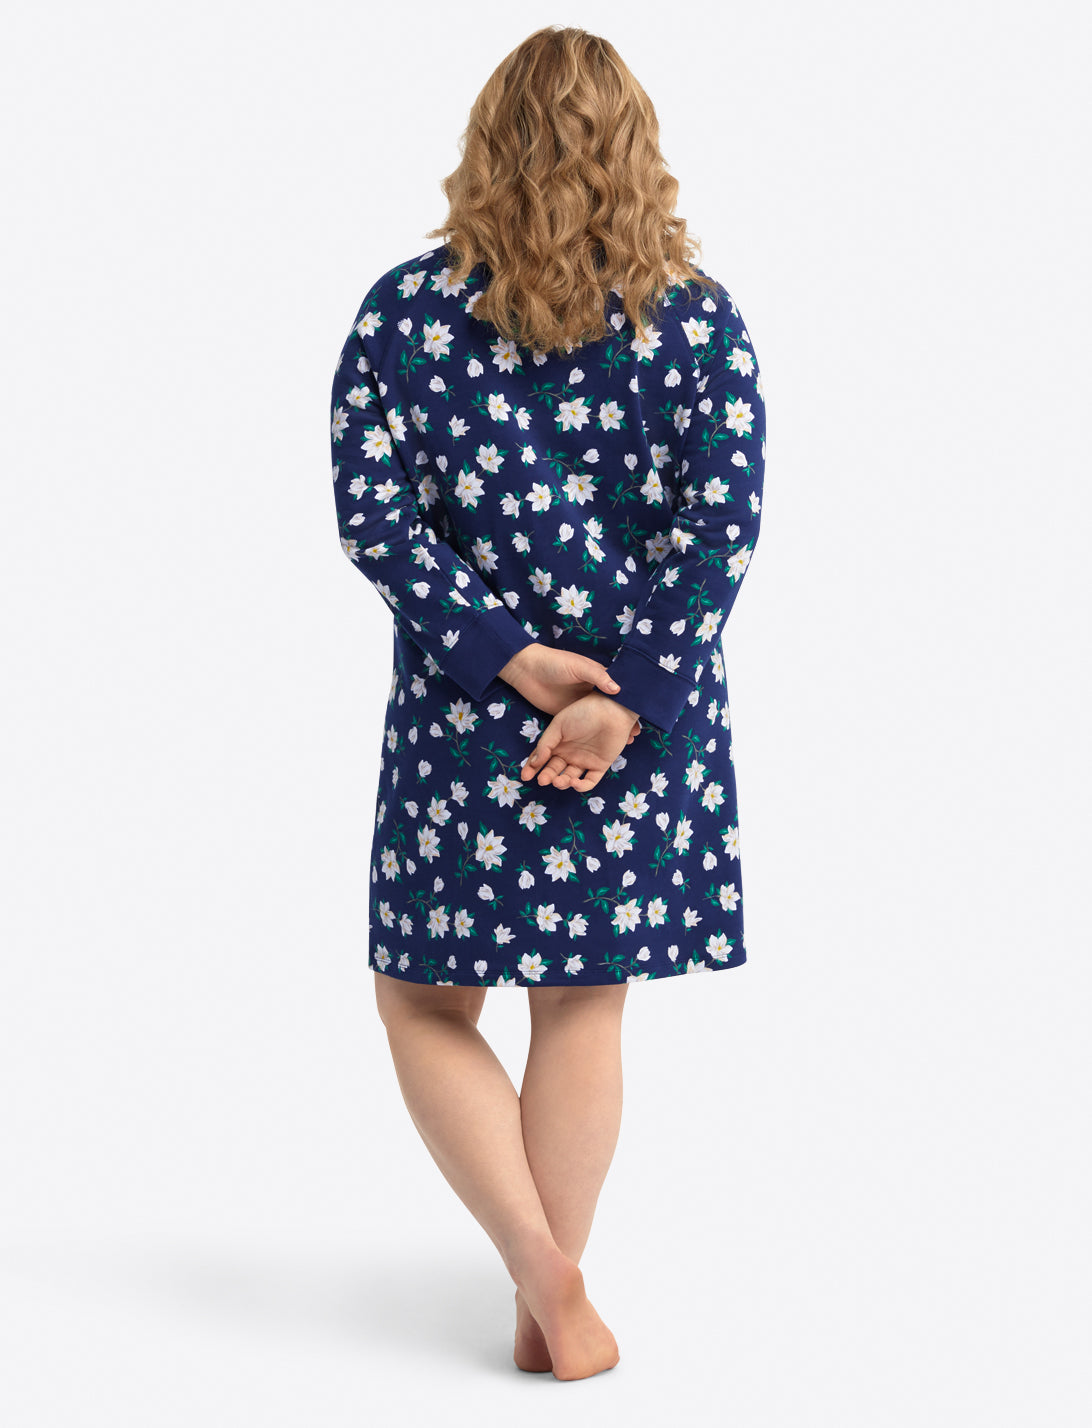 Natalie Sweatshirt Dress in Magnolia